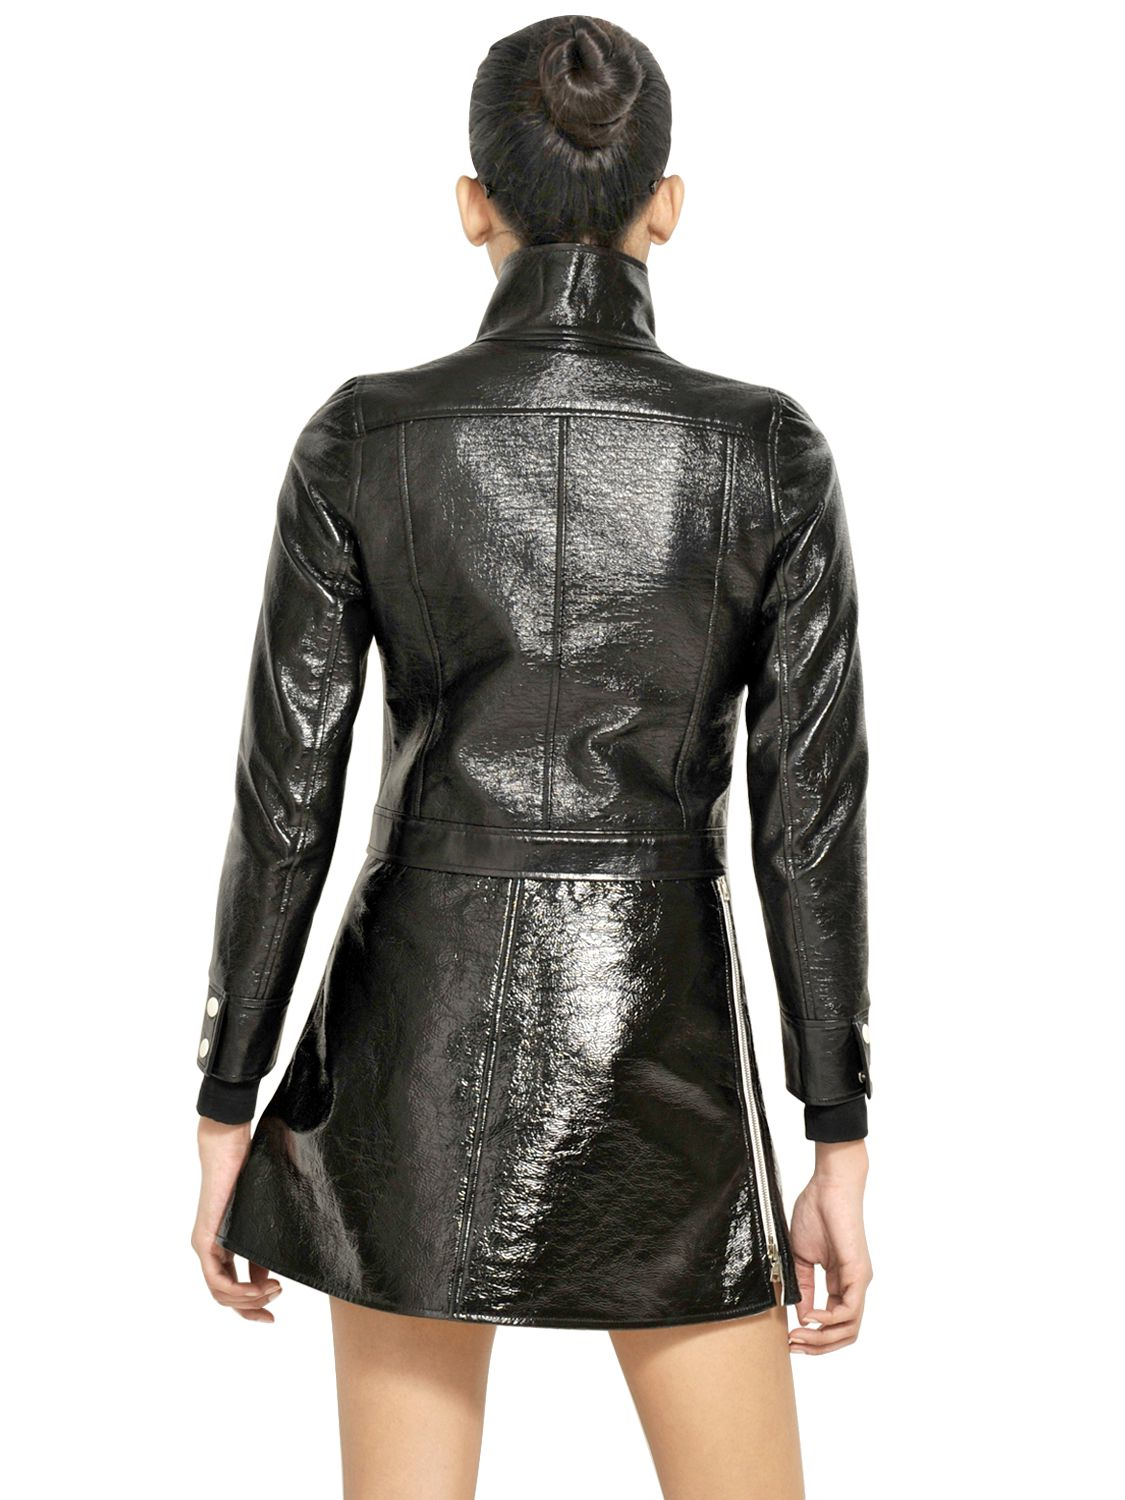 Plus Size Coats Jackets  Vests for Women for sale  eBay